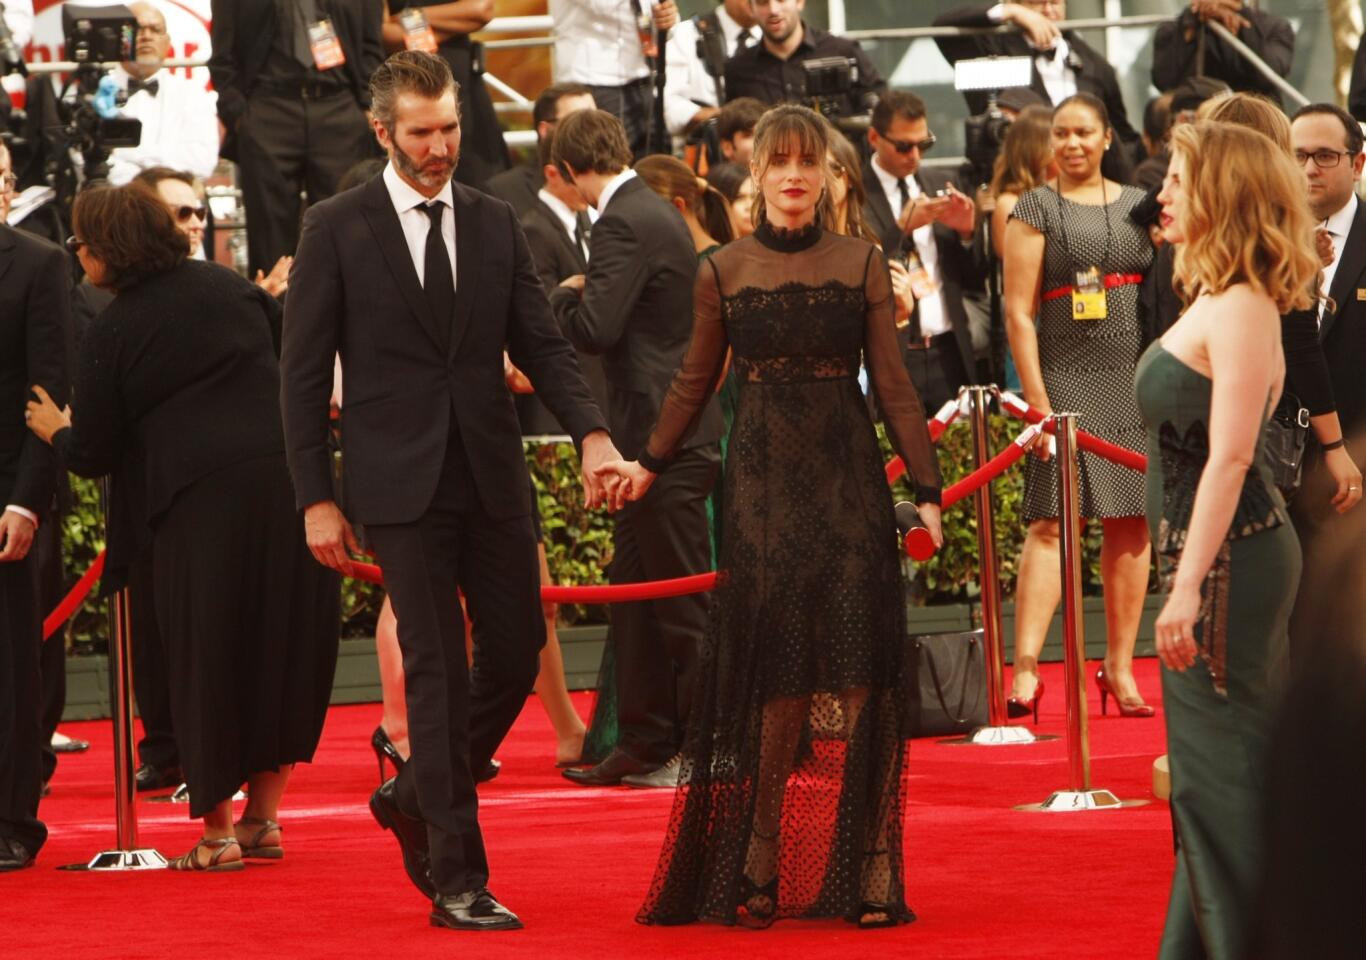 Emmy Awards: Red carpet fashion